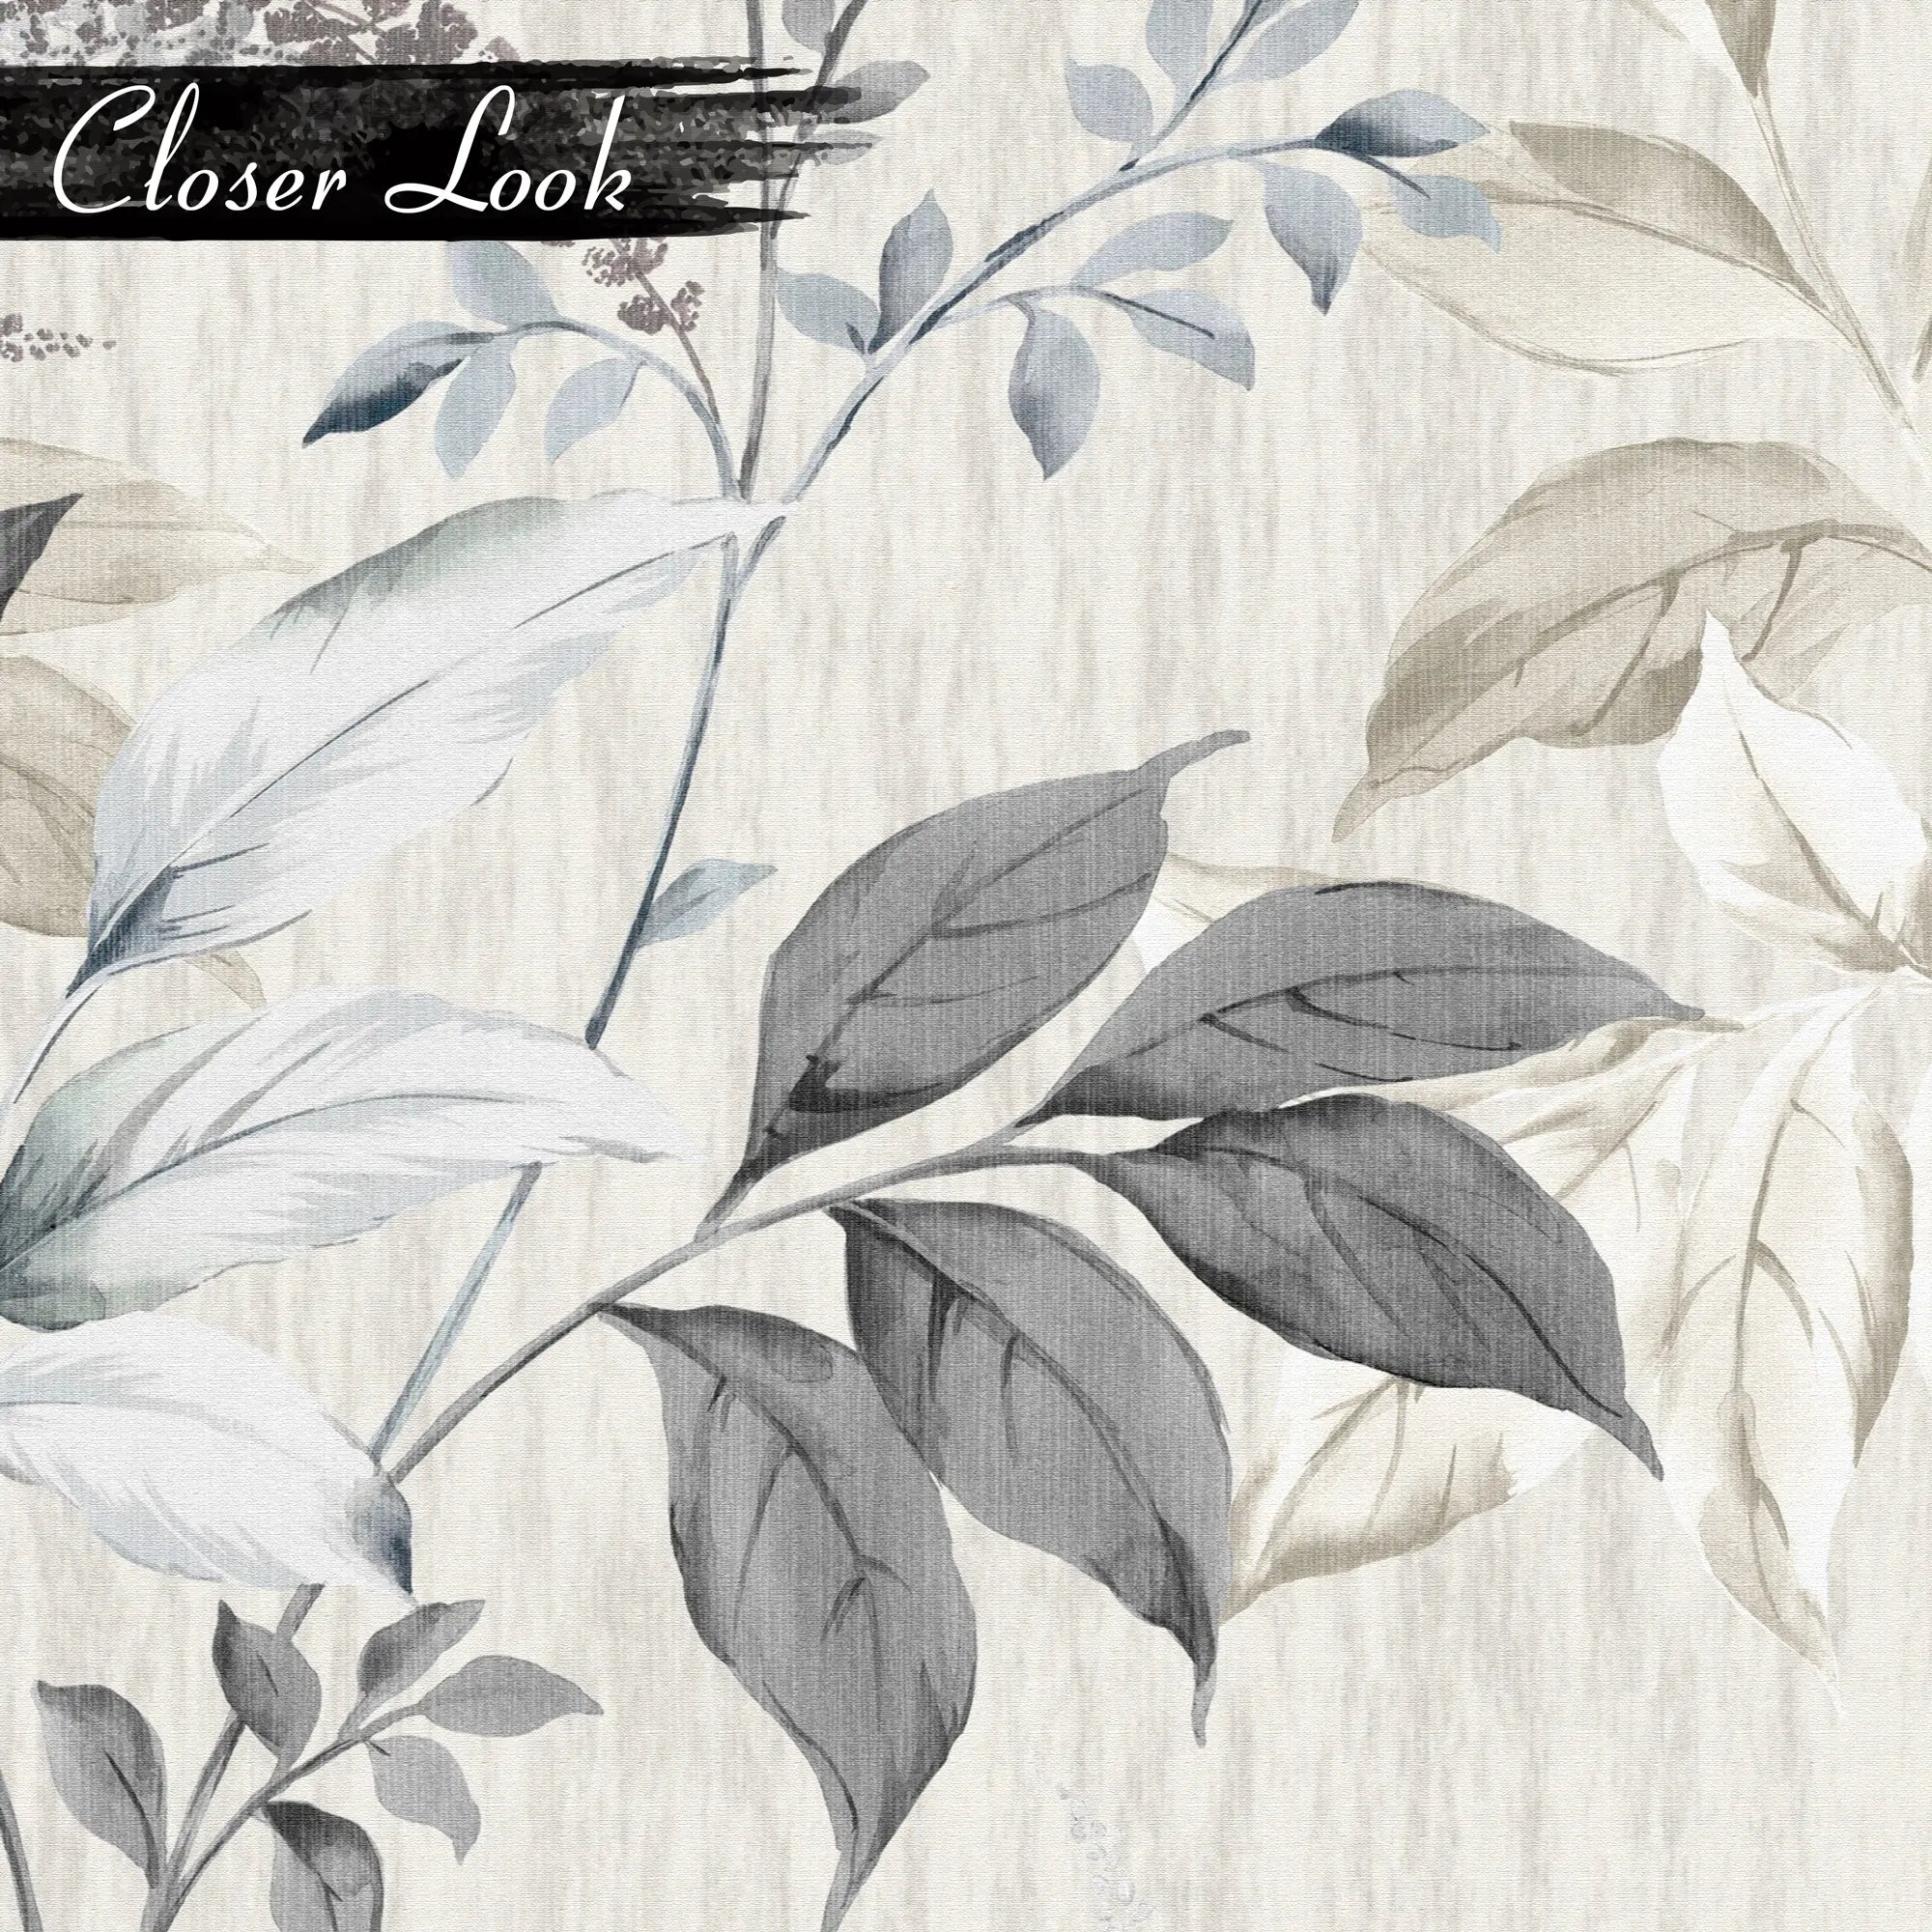 3225 / Porcelain Inspired Floral Wall Decor, Botanical Wallpaper, Easy Install for Home, Light Grey Delicate Flowers Design - Artevella